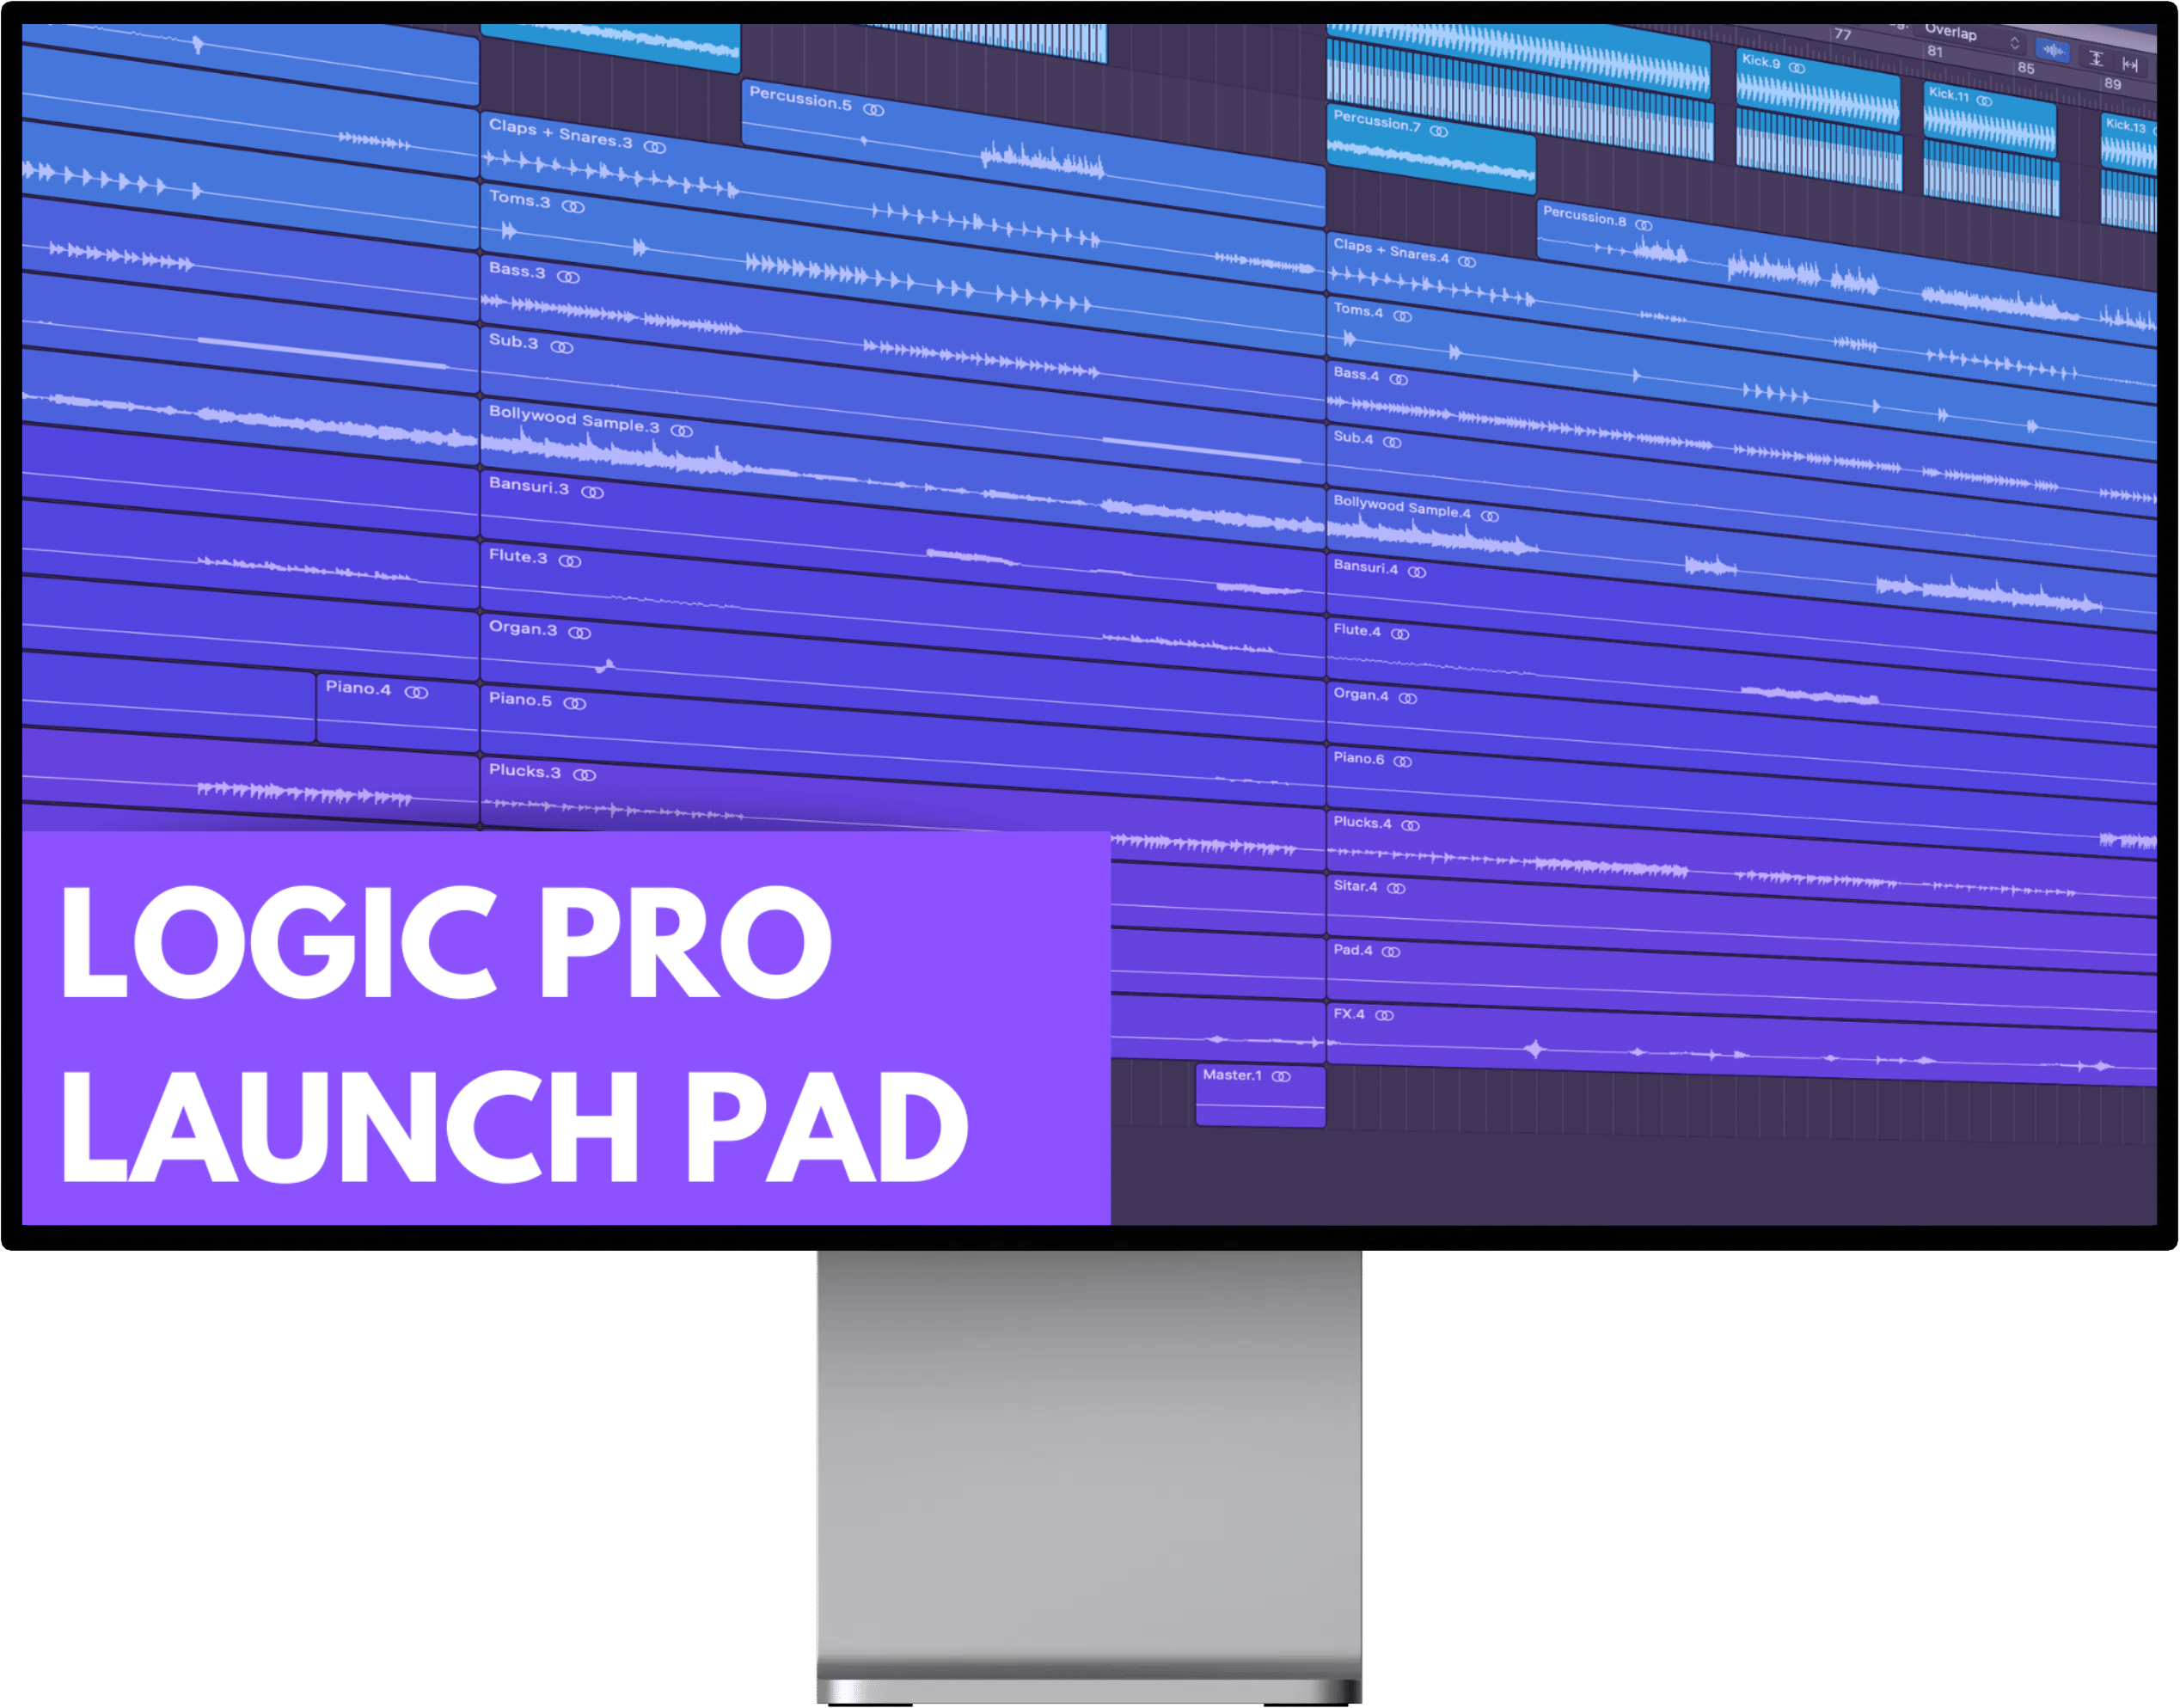 Logic Pro Launch Pad course logo on desktop display